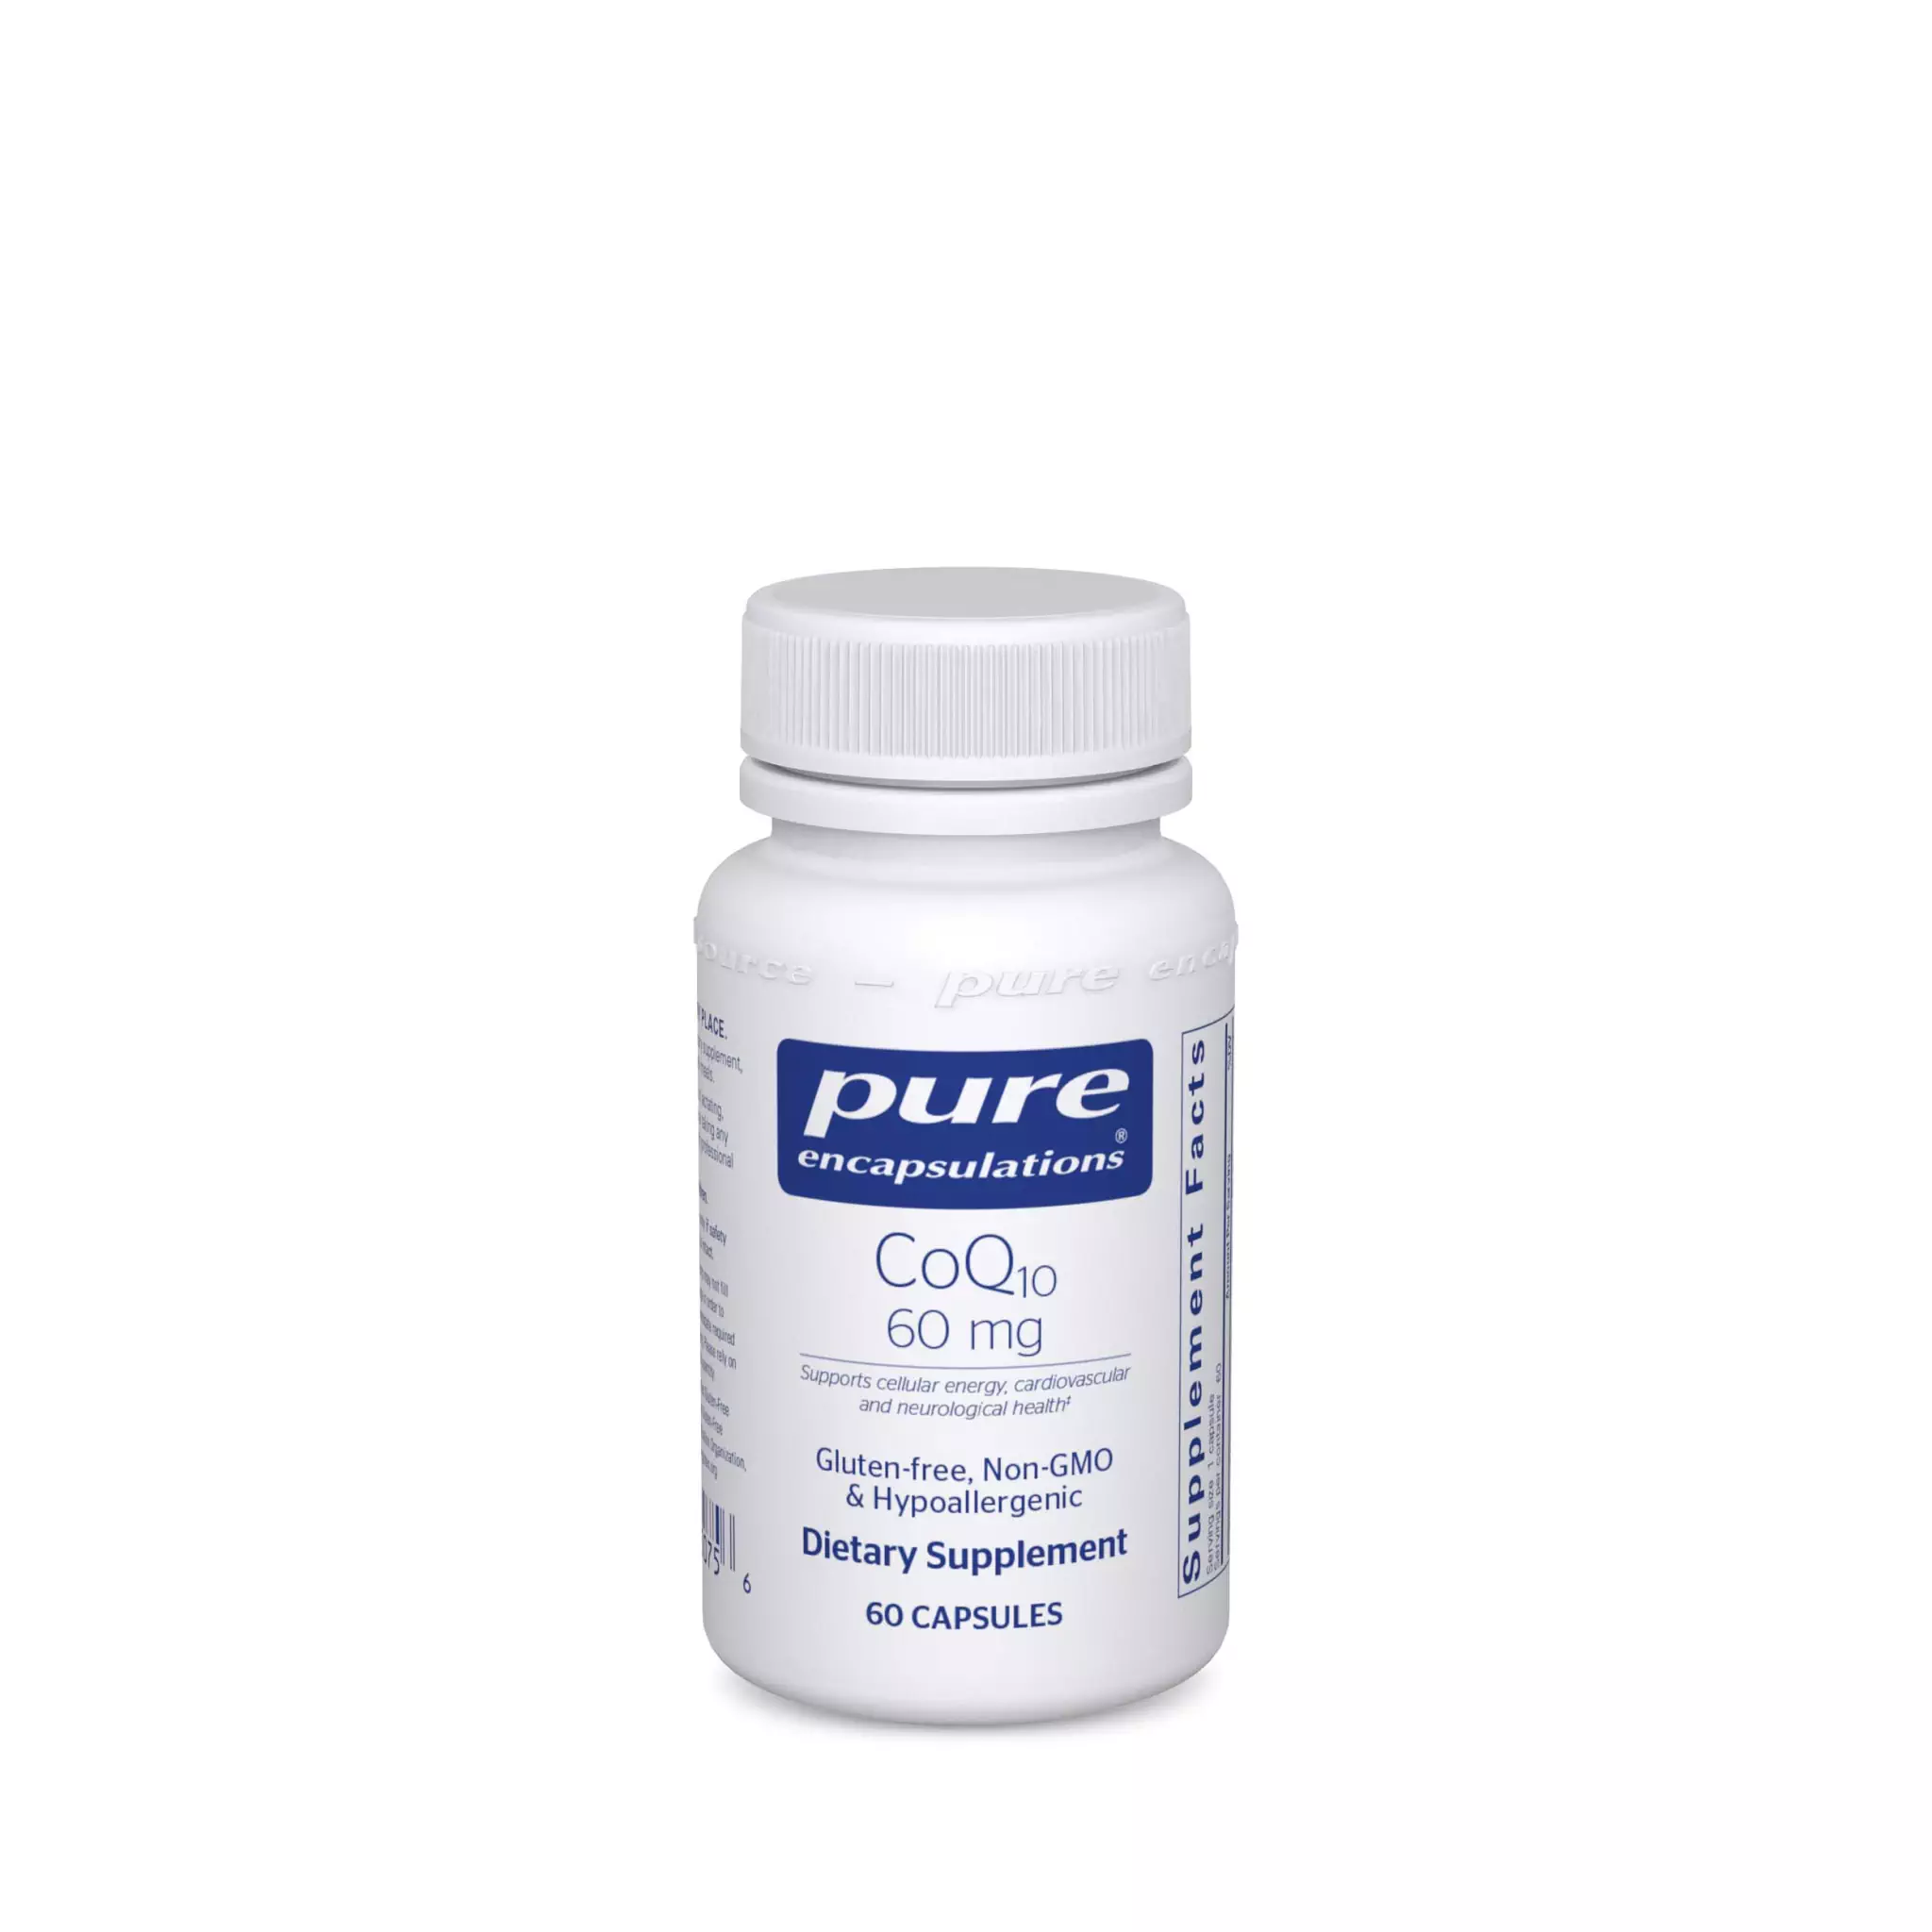 Pure Encapsulations - Coq10 60 mg